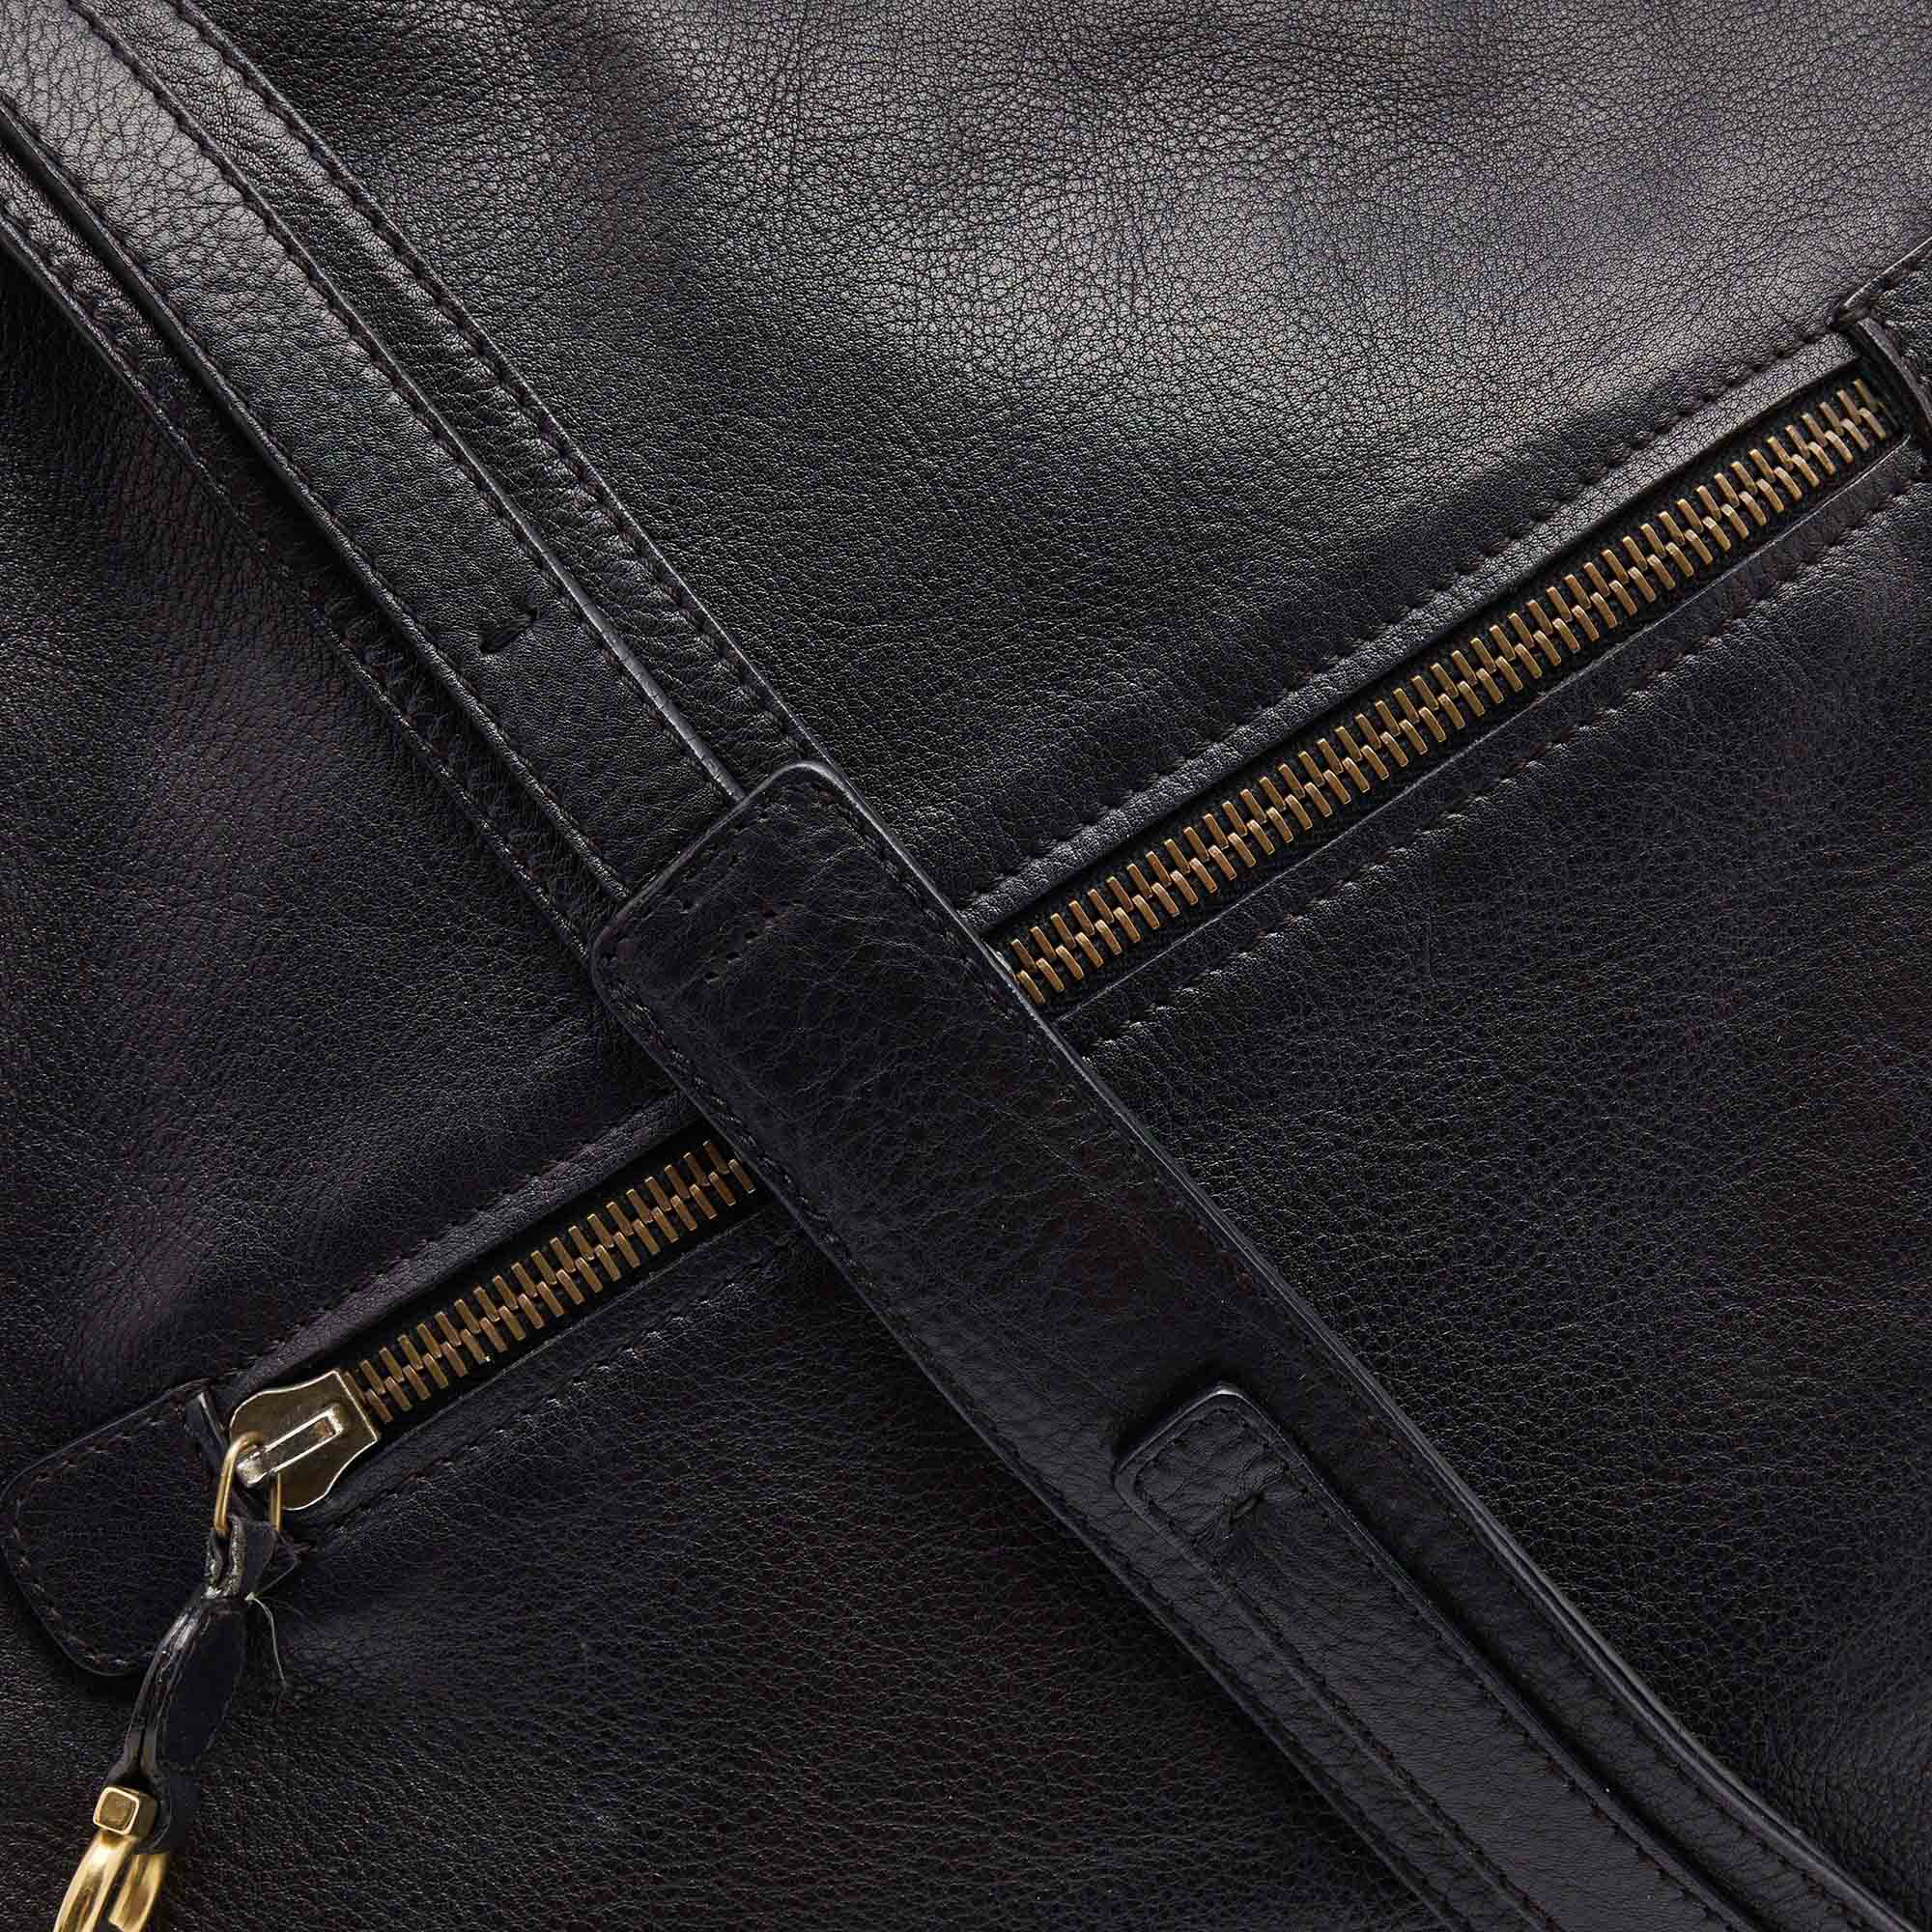 Salvatore Ferragamo Black Leather Messenger Bag